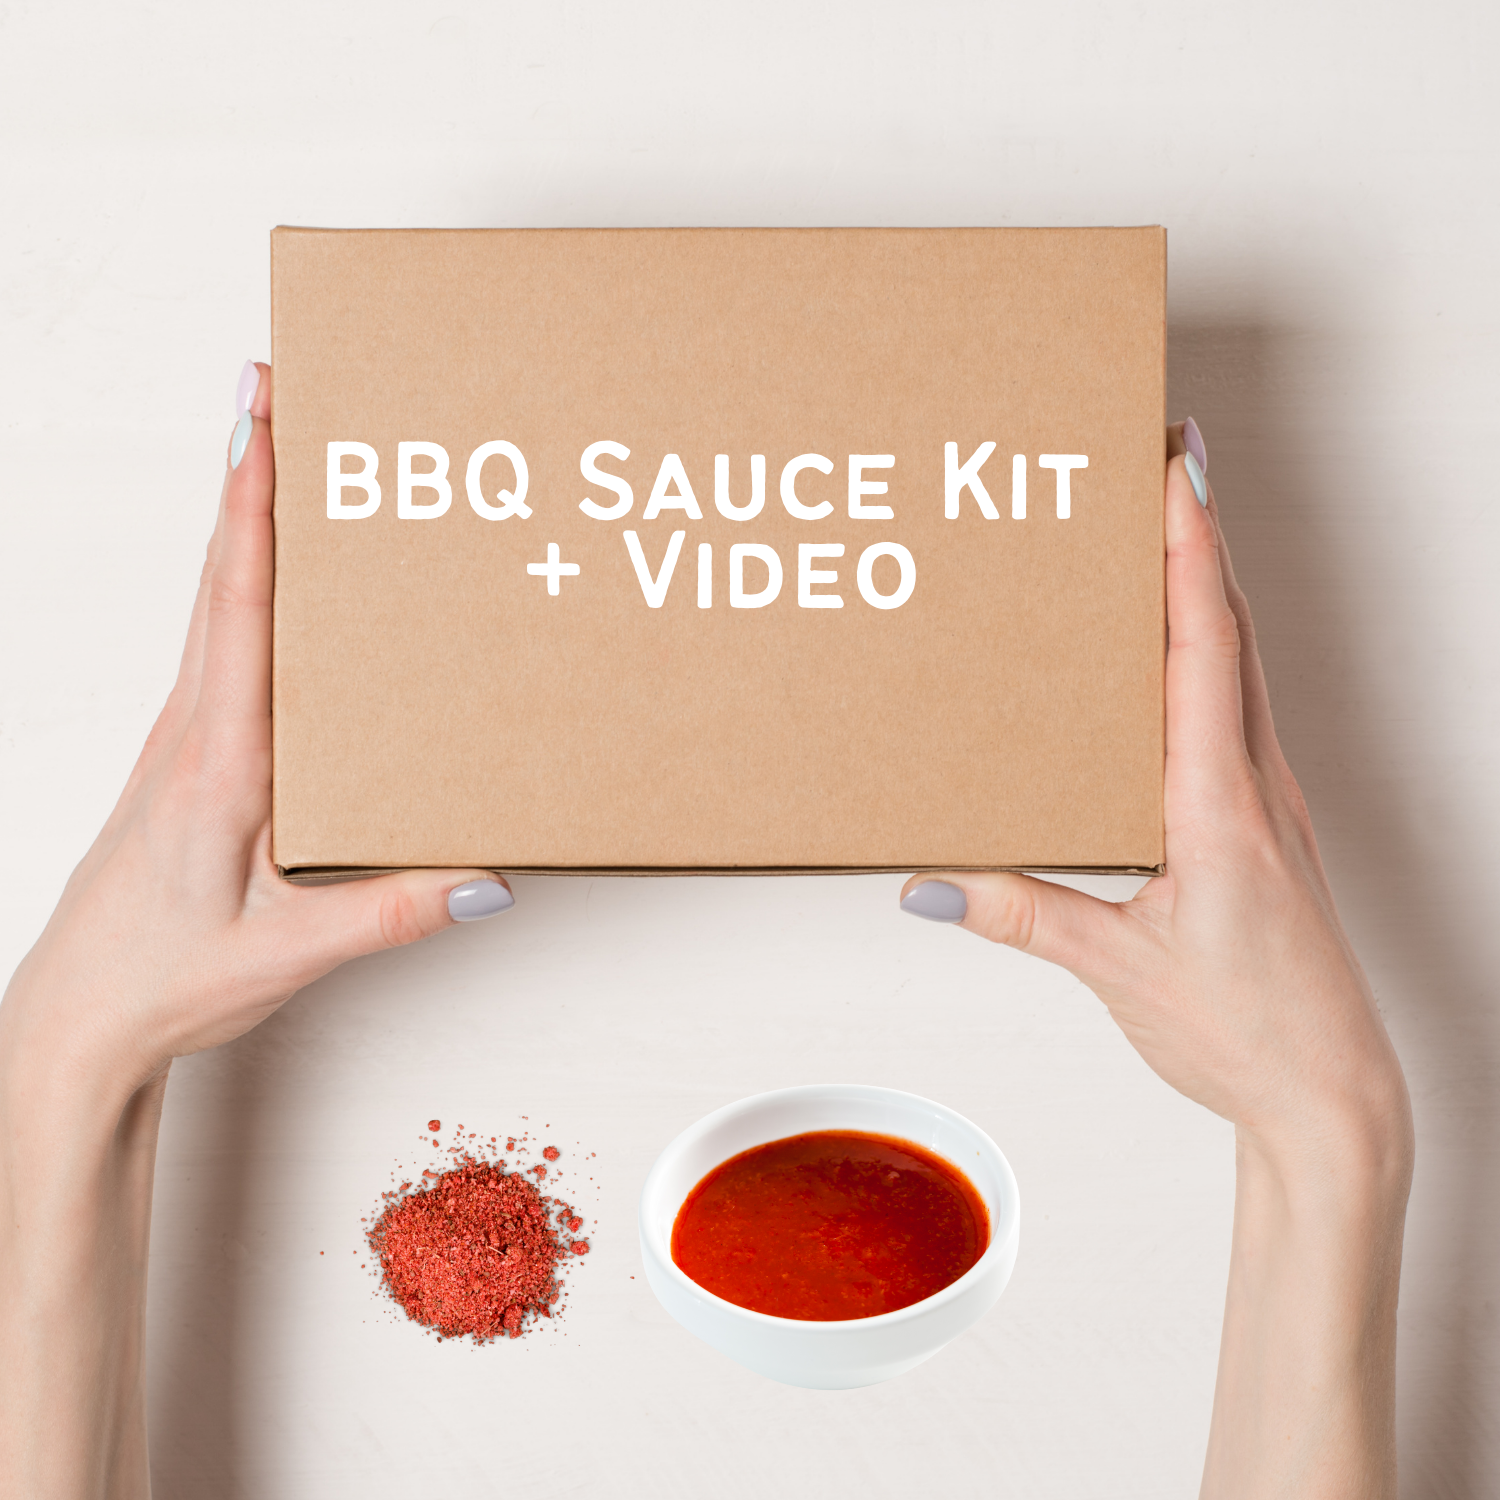 Make your own BBQ sauce with the Grow and Make BBQ sauce kit